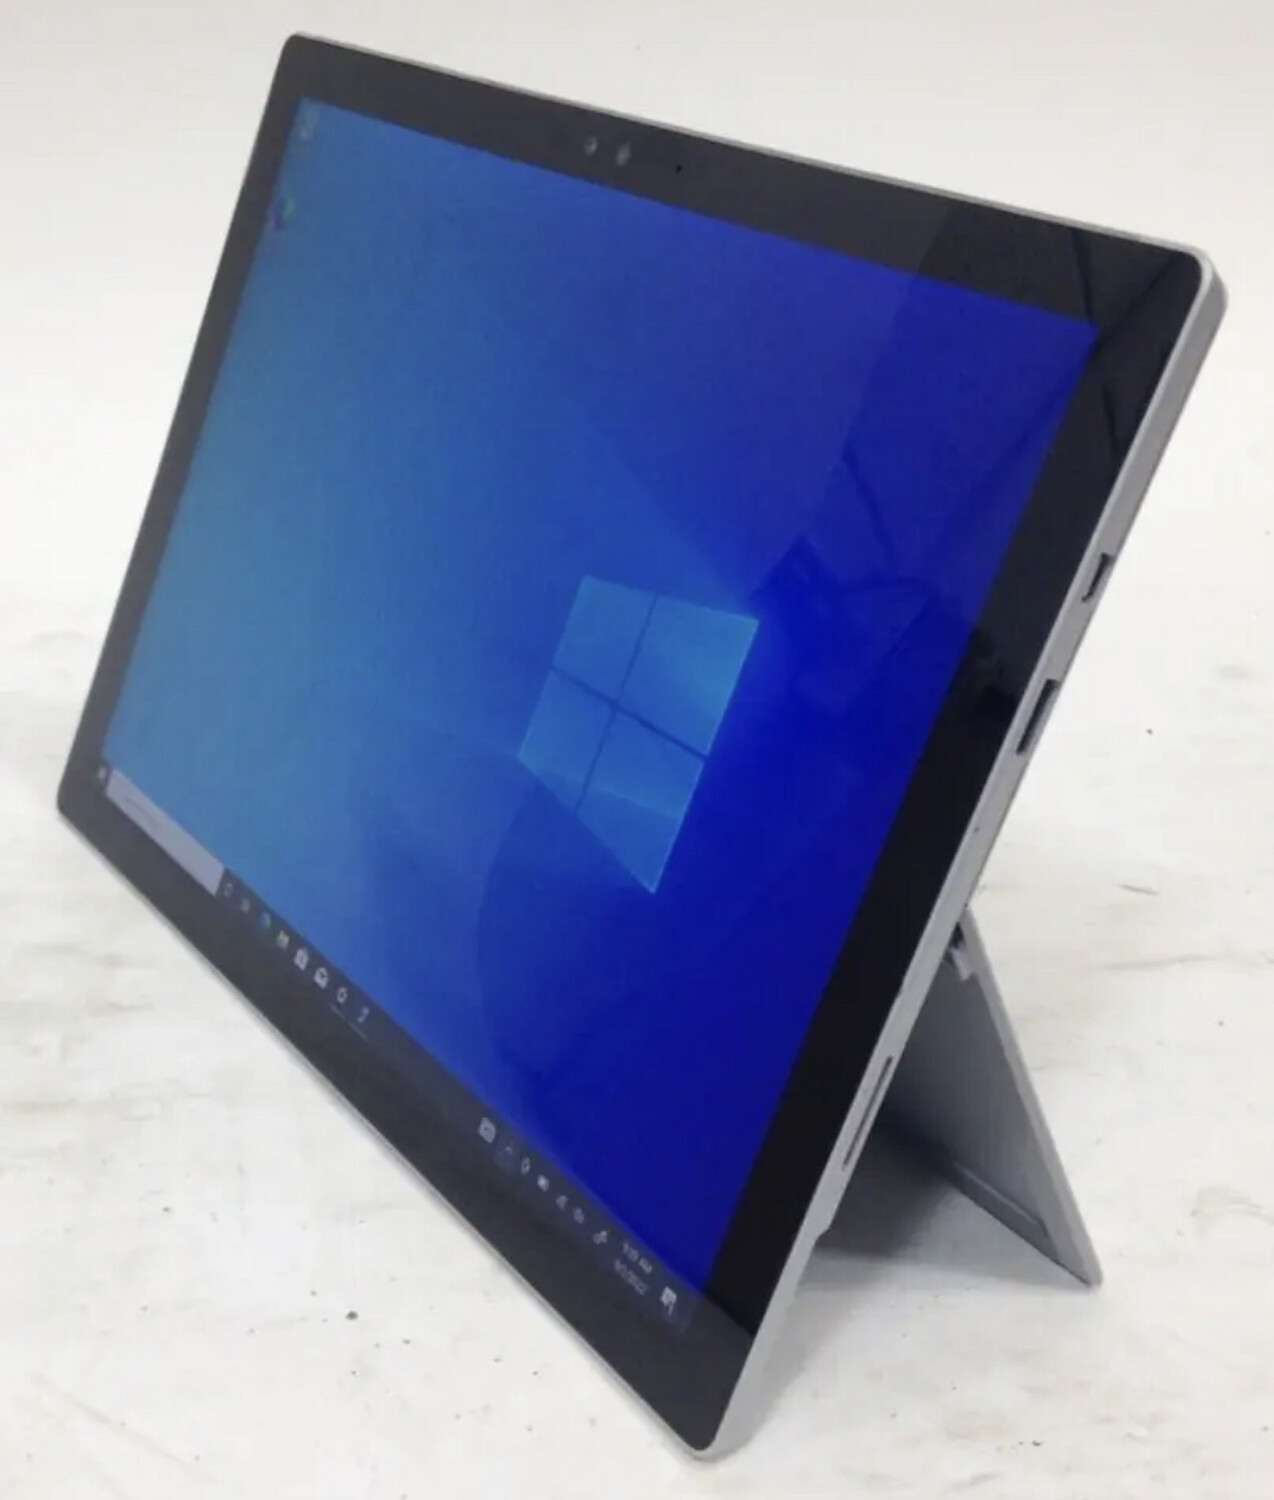 Microsoft Surface Pro 3 Intel Core i5 4300U 2.50GHz 4GB DDR3 128GB SSD (Surface Pro 3 Only)